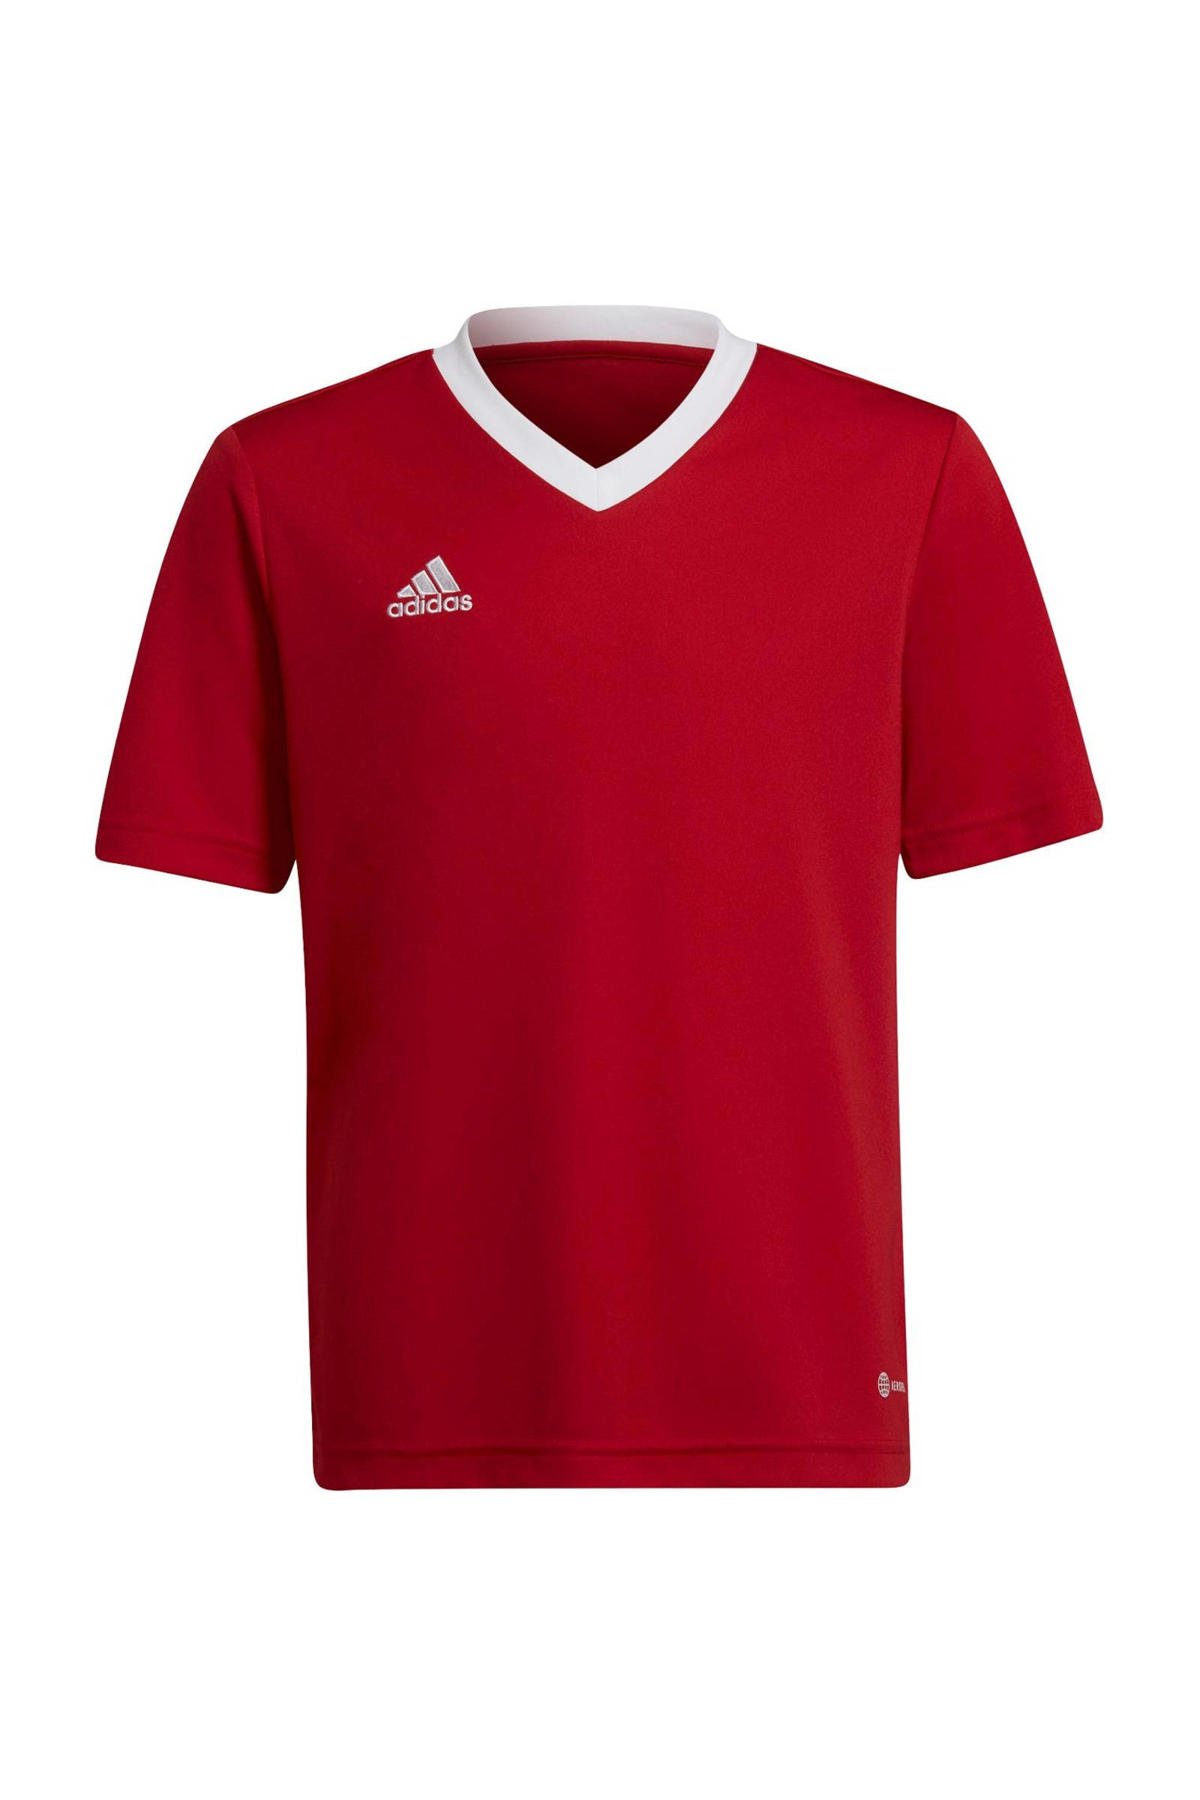 Koopje Disco Intens adidas Performance Junior sport T-shirt rood | wehkamp